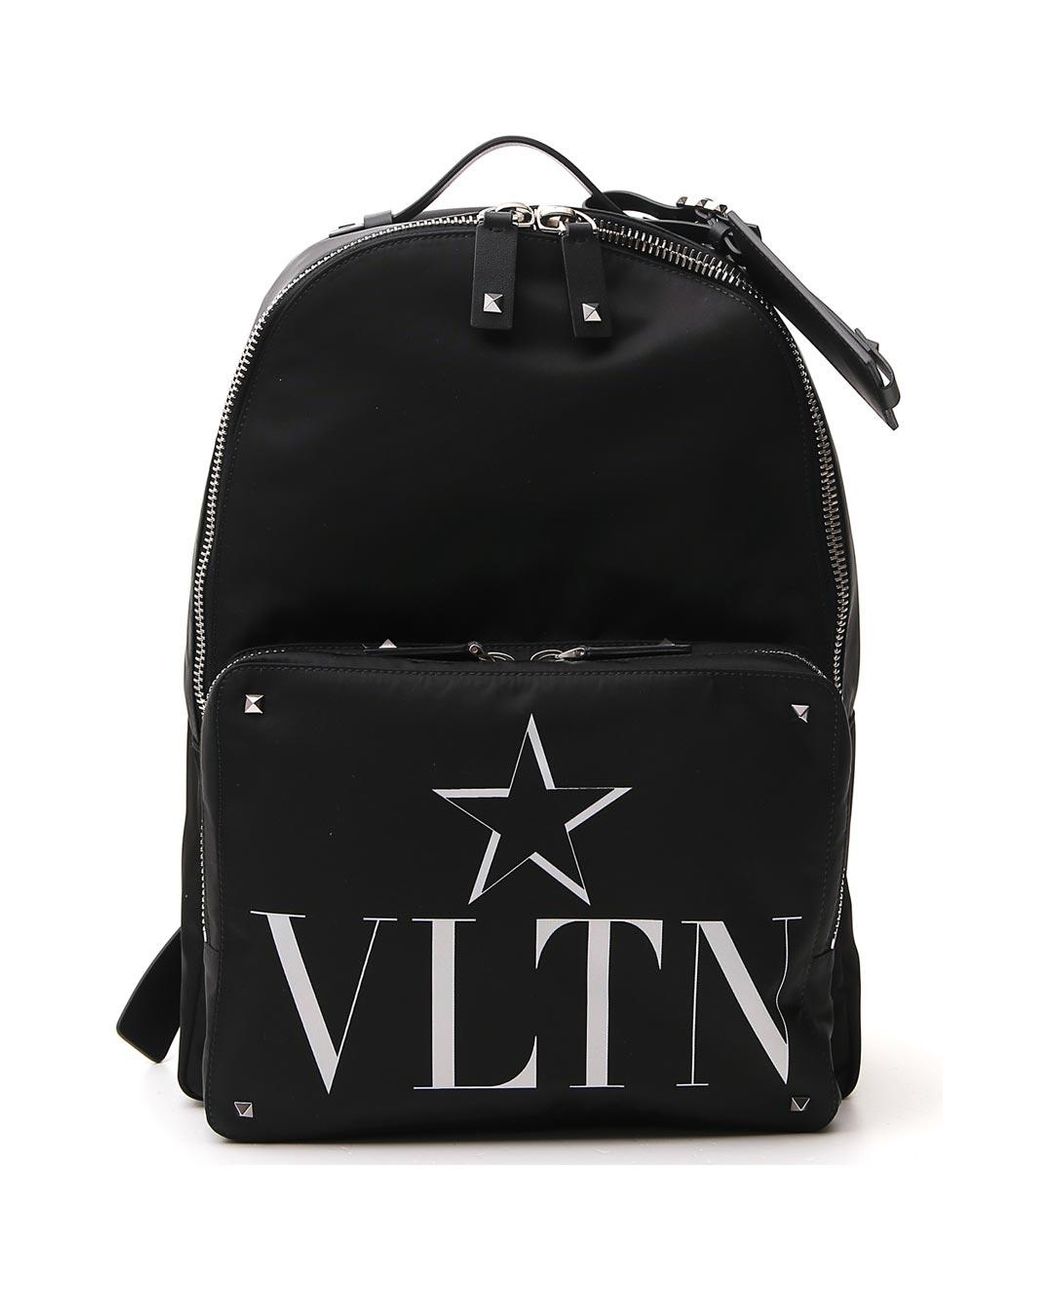 Valentino Leather Vltn School Backpack in Black for Men - Lyst